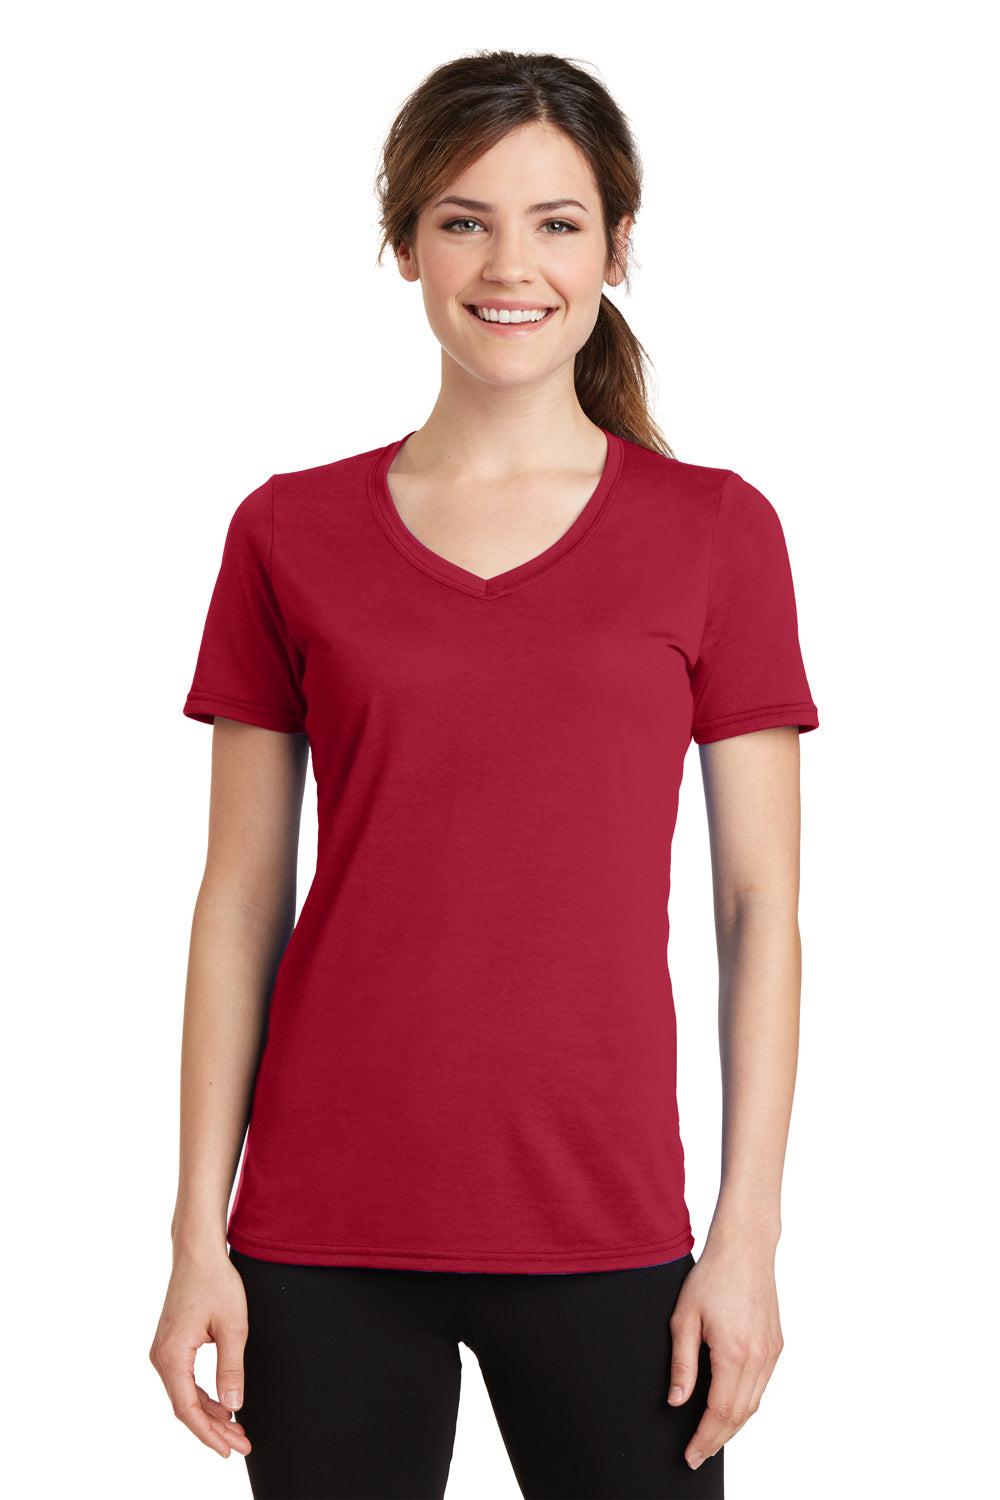 Port & Company LPC381V Womens Dry Zone Performance Moisture Wicking Short Sleeve V-Neck T-Shirt Red Front